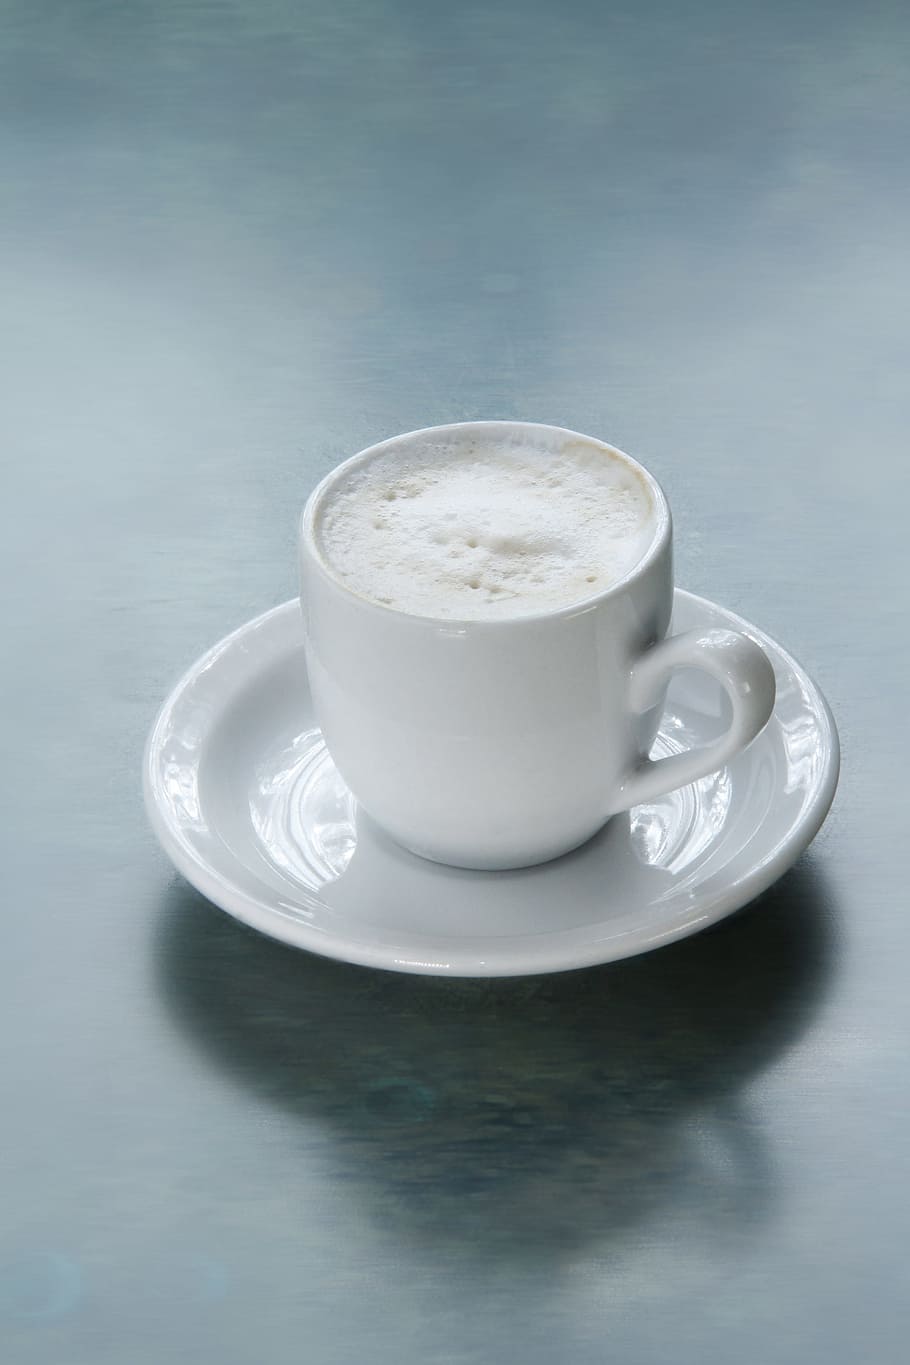 white, ceramic, mug, saucer, Cappuccino, with coffee, cup coffee, coffee brown, coffee, cup